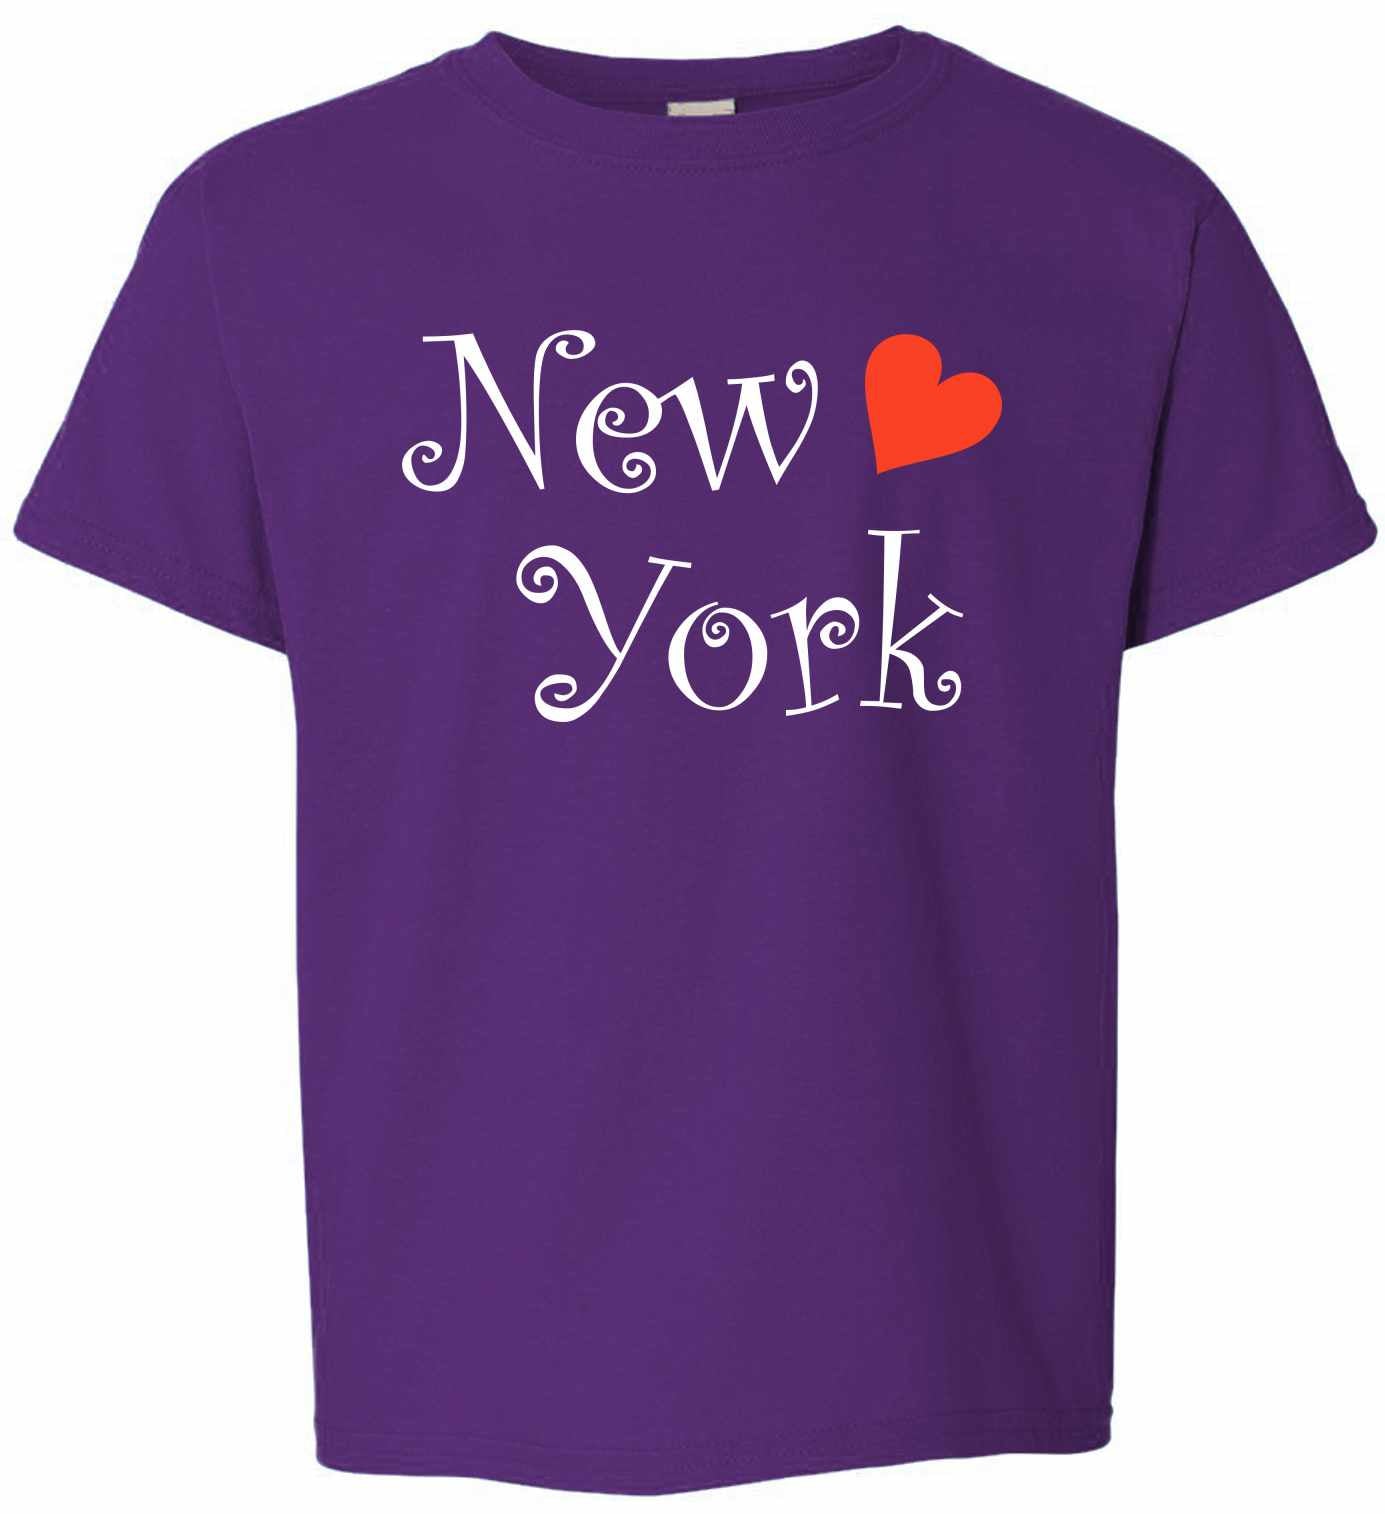 New York on Kids T-Shirt